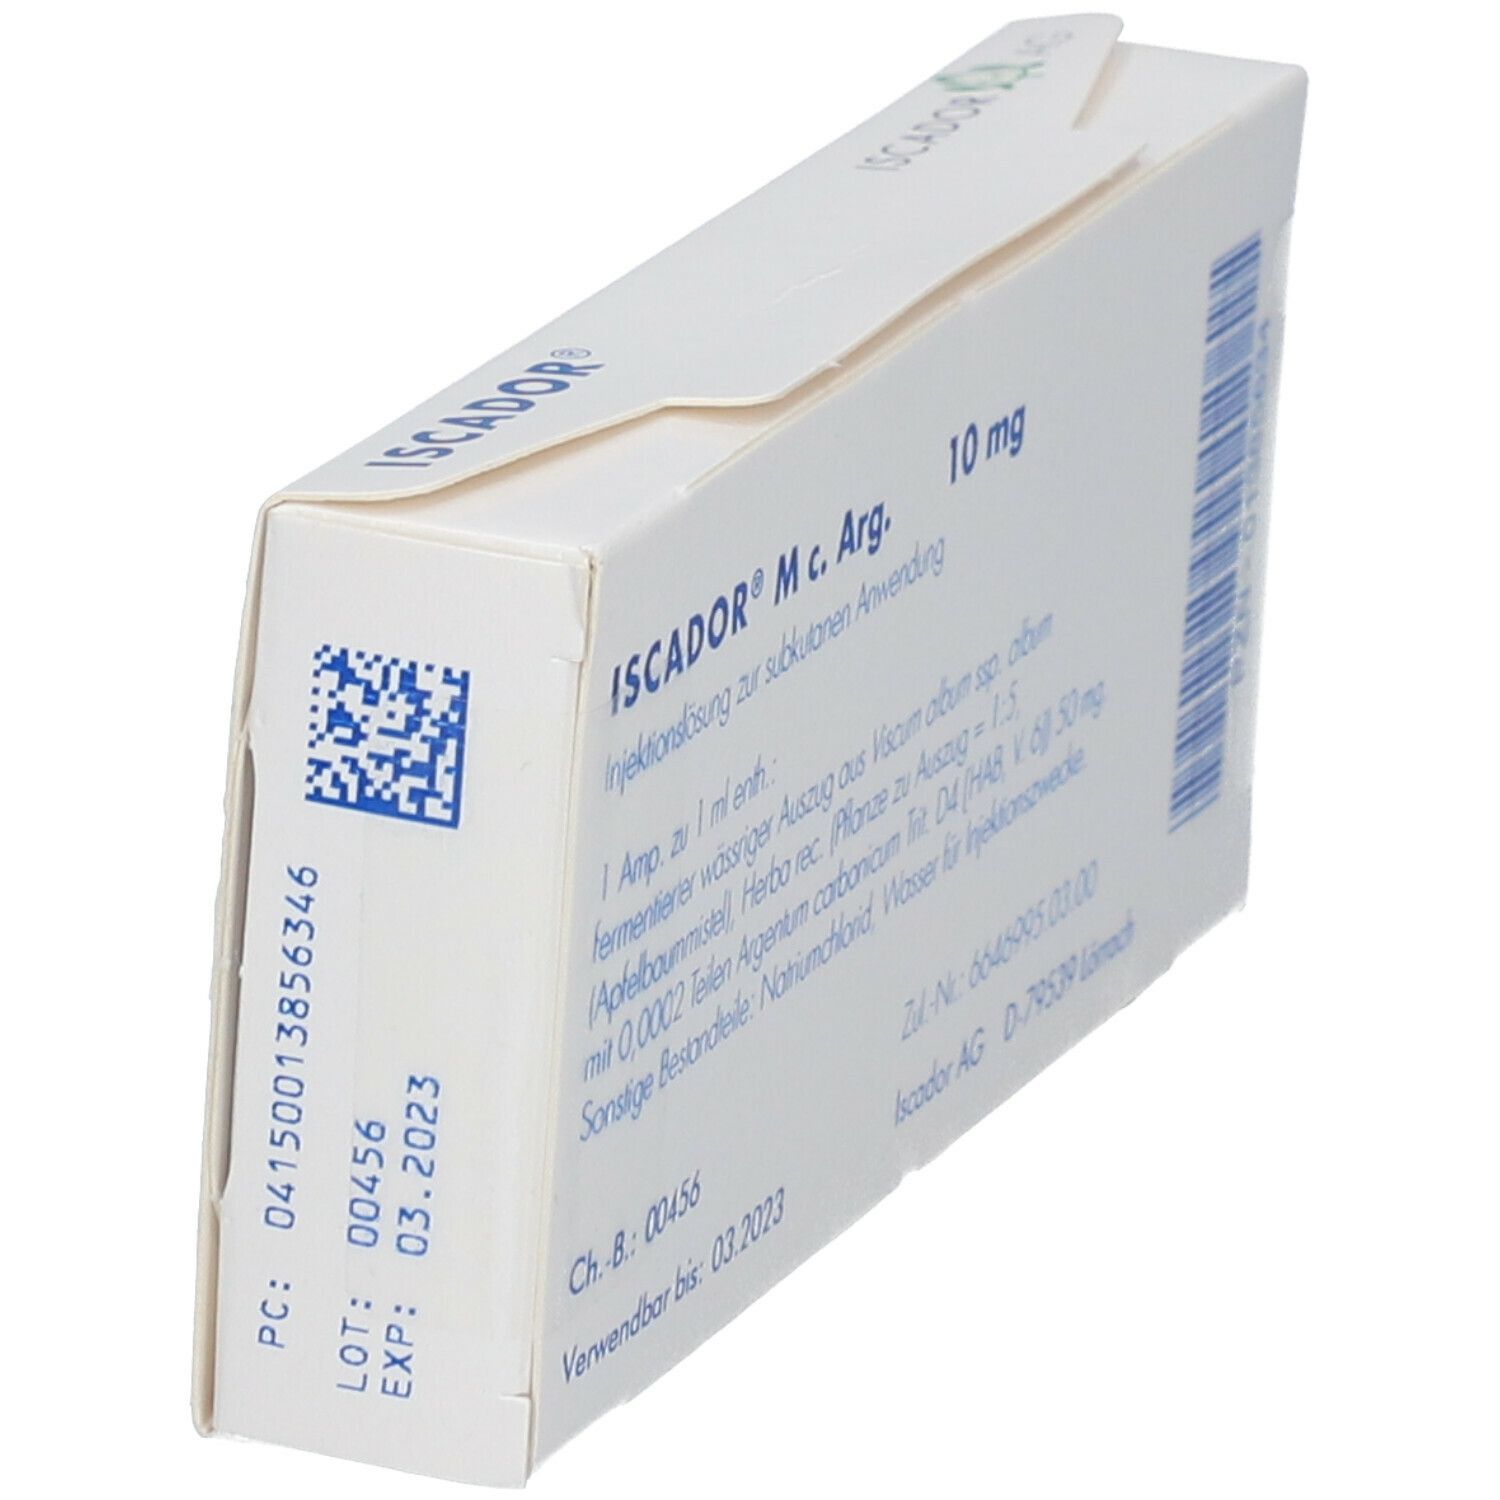 ISCADOR® M c. Arg. 10 mg